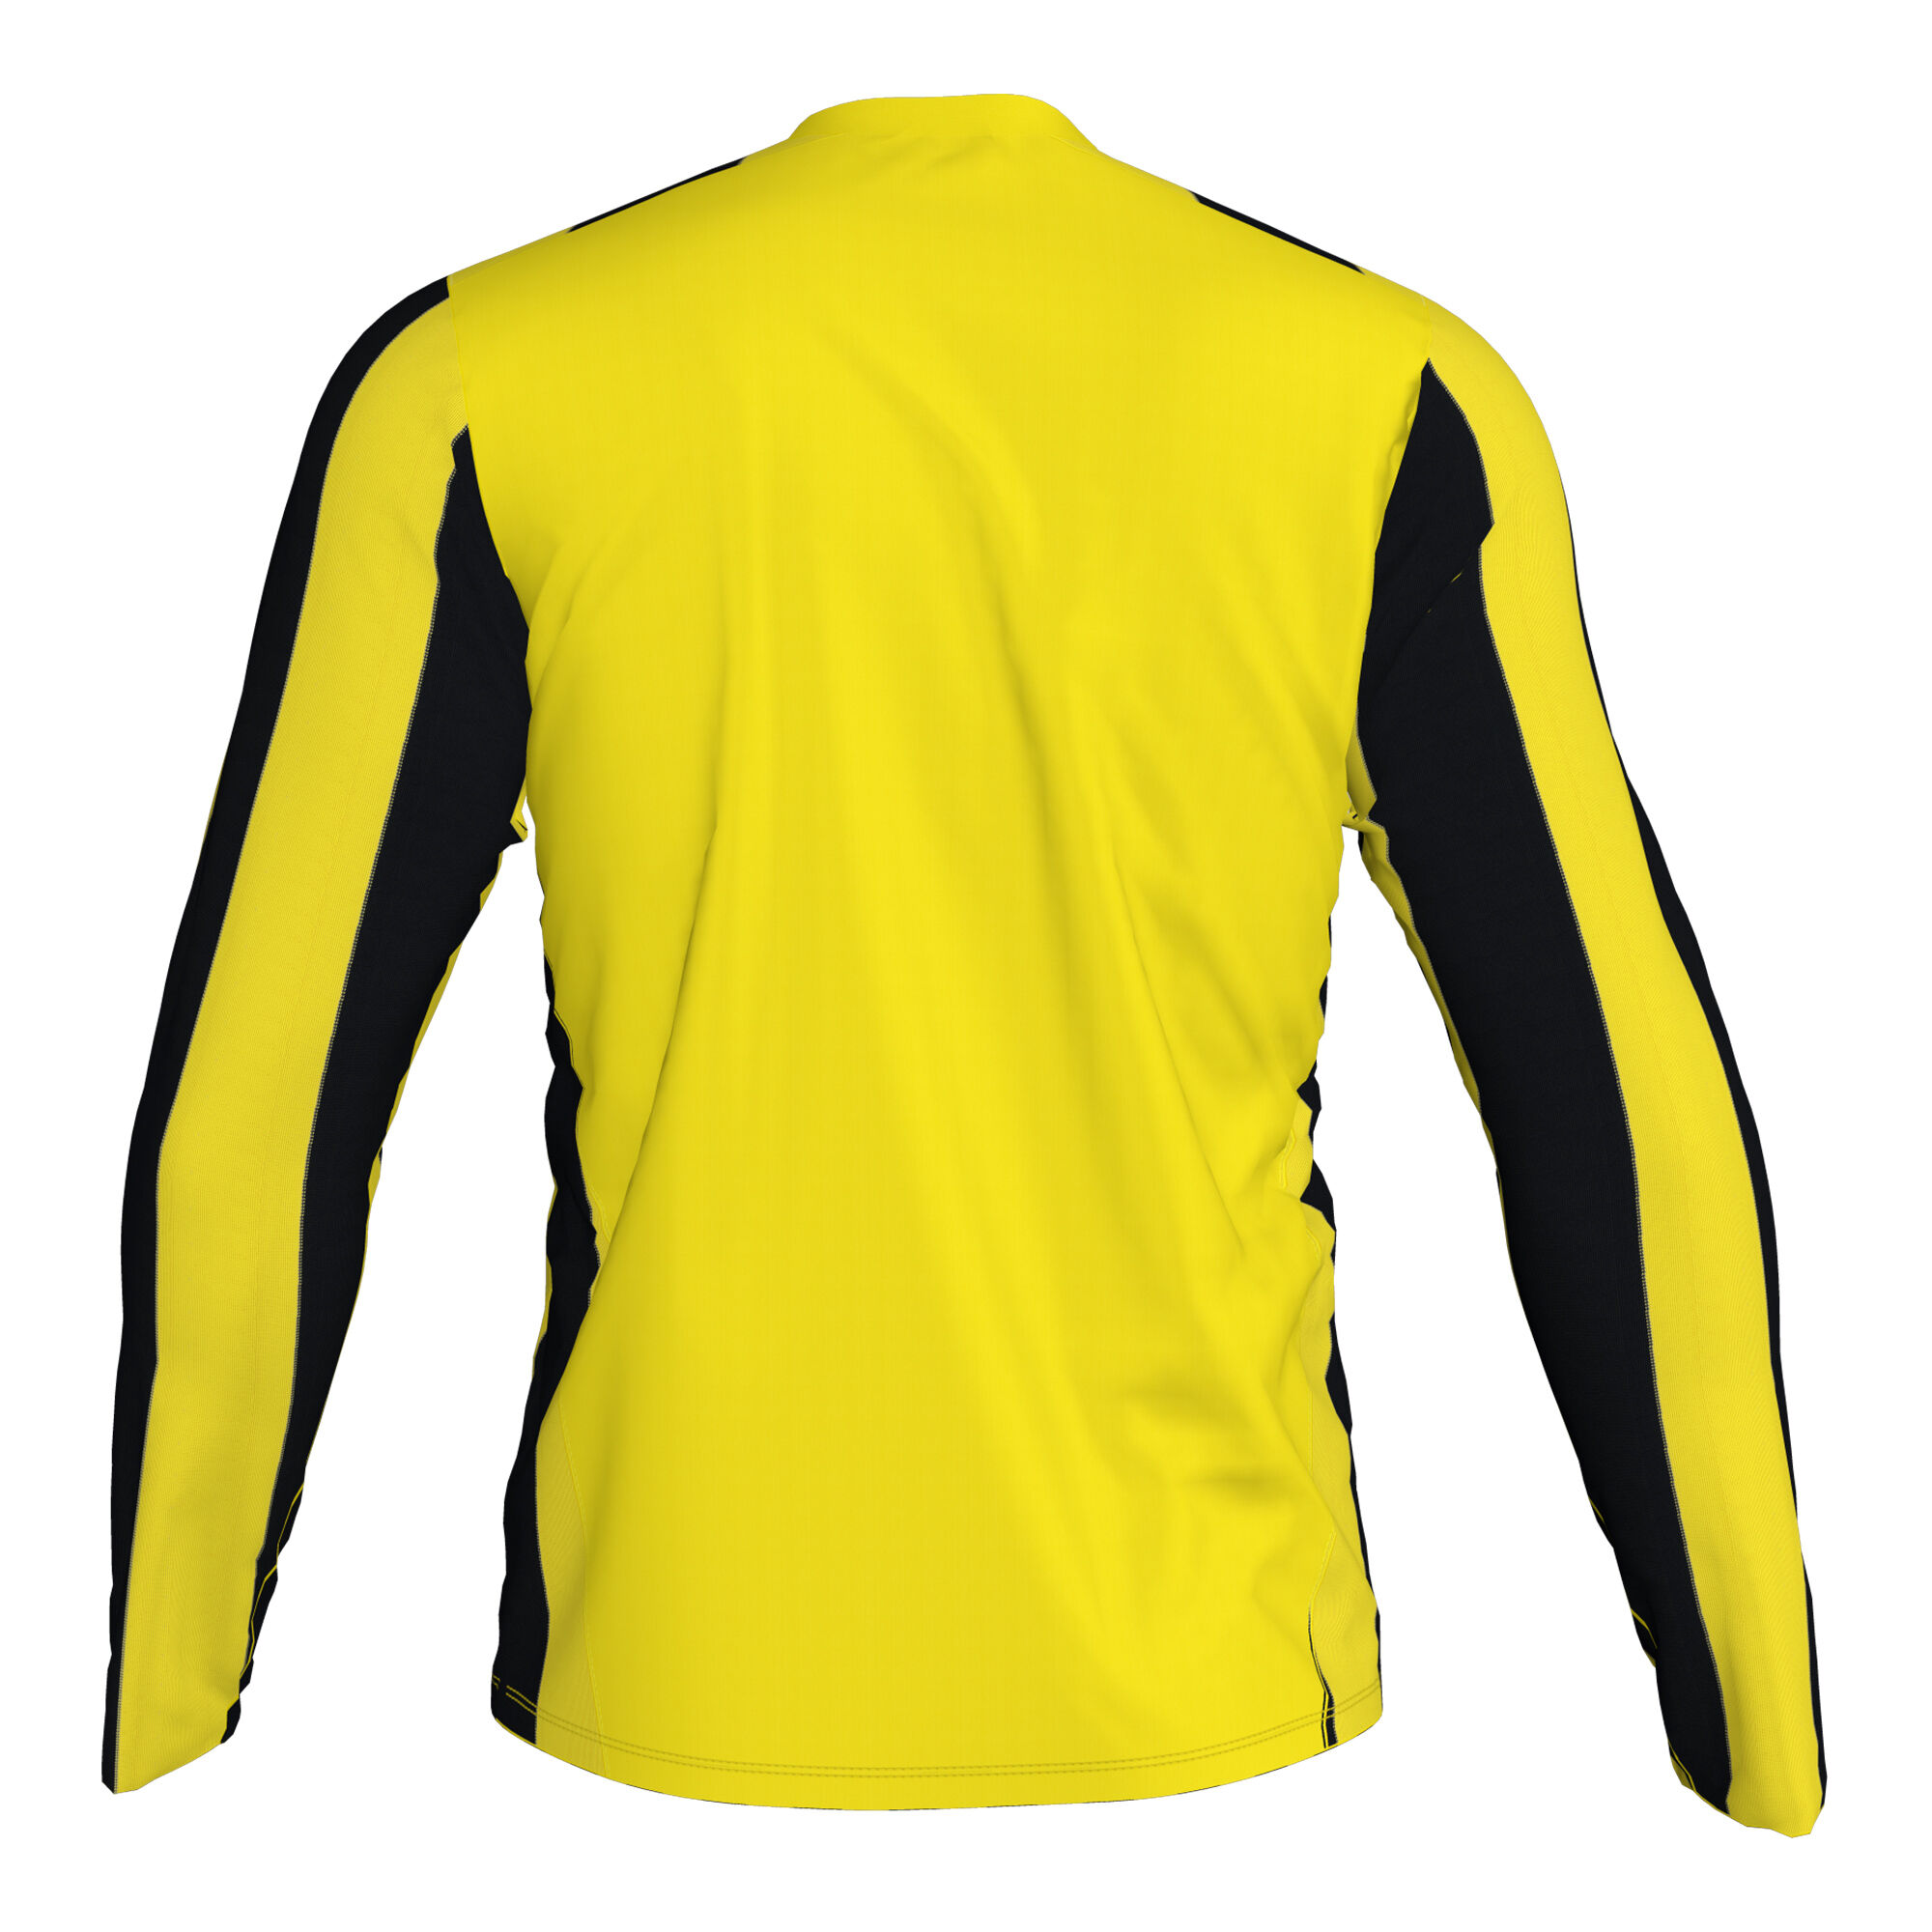 Camiseta manga larga hombre Inter amarillo negro